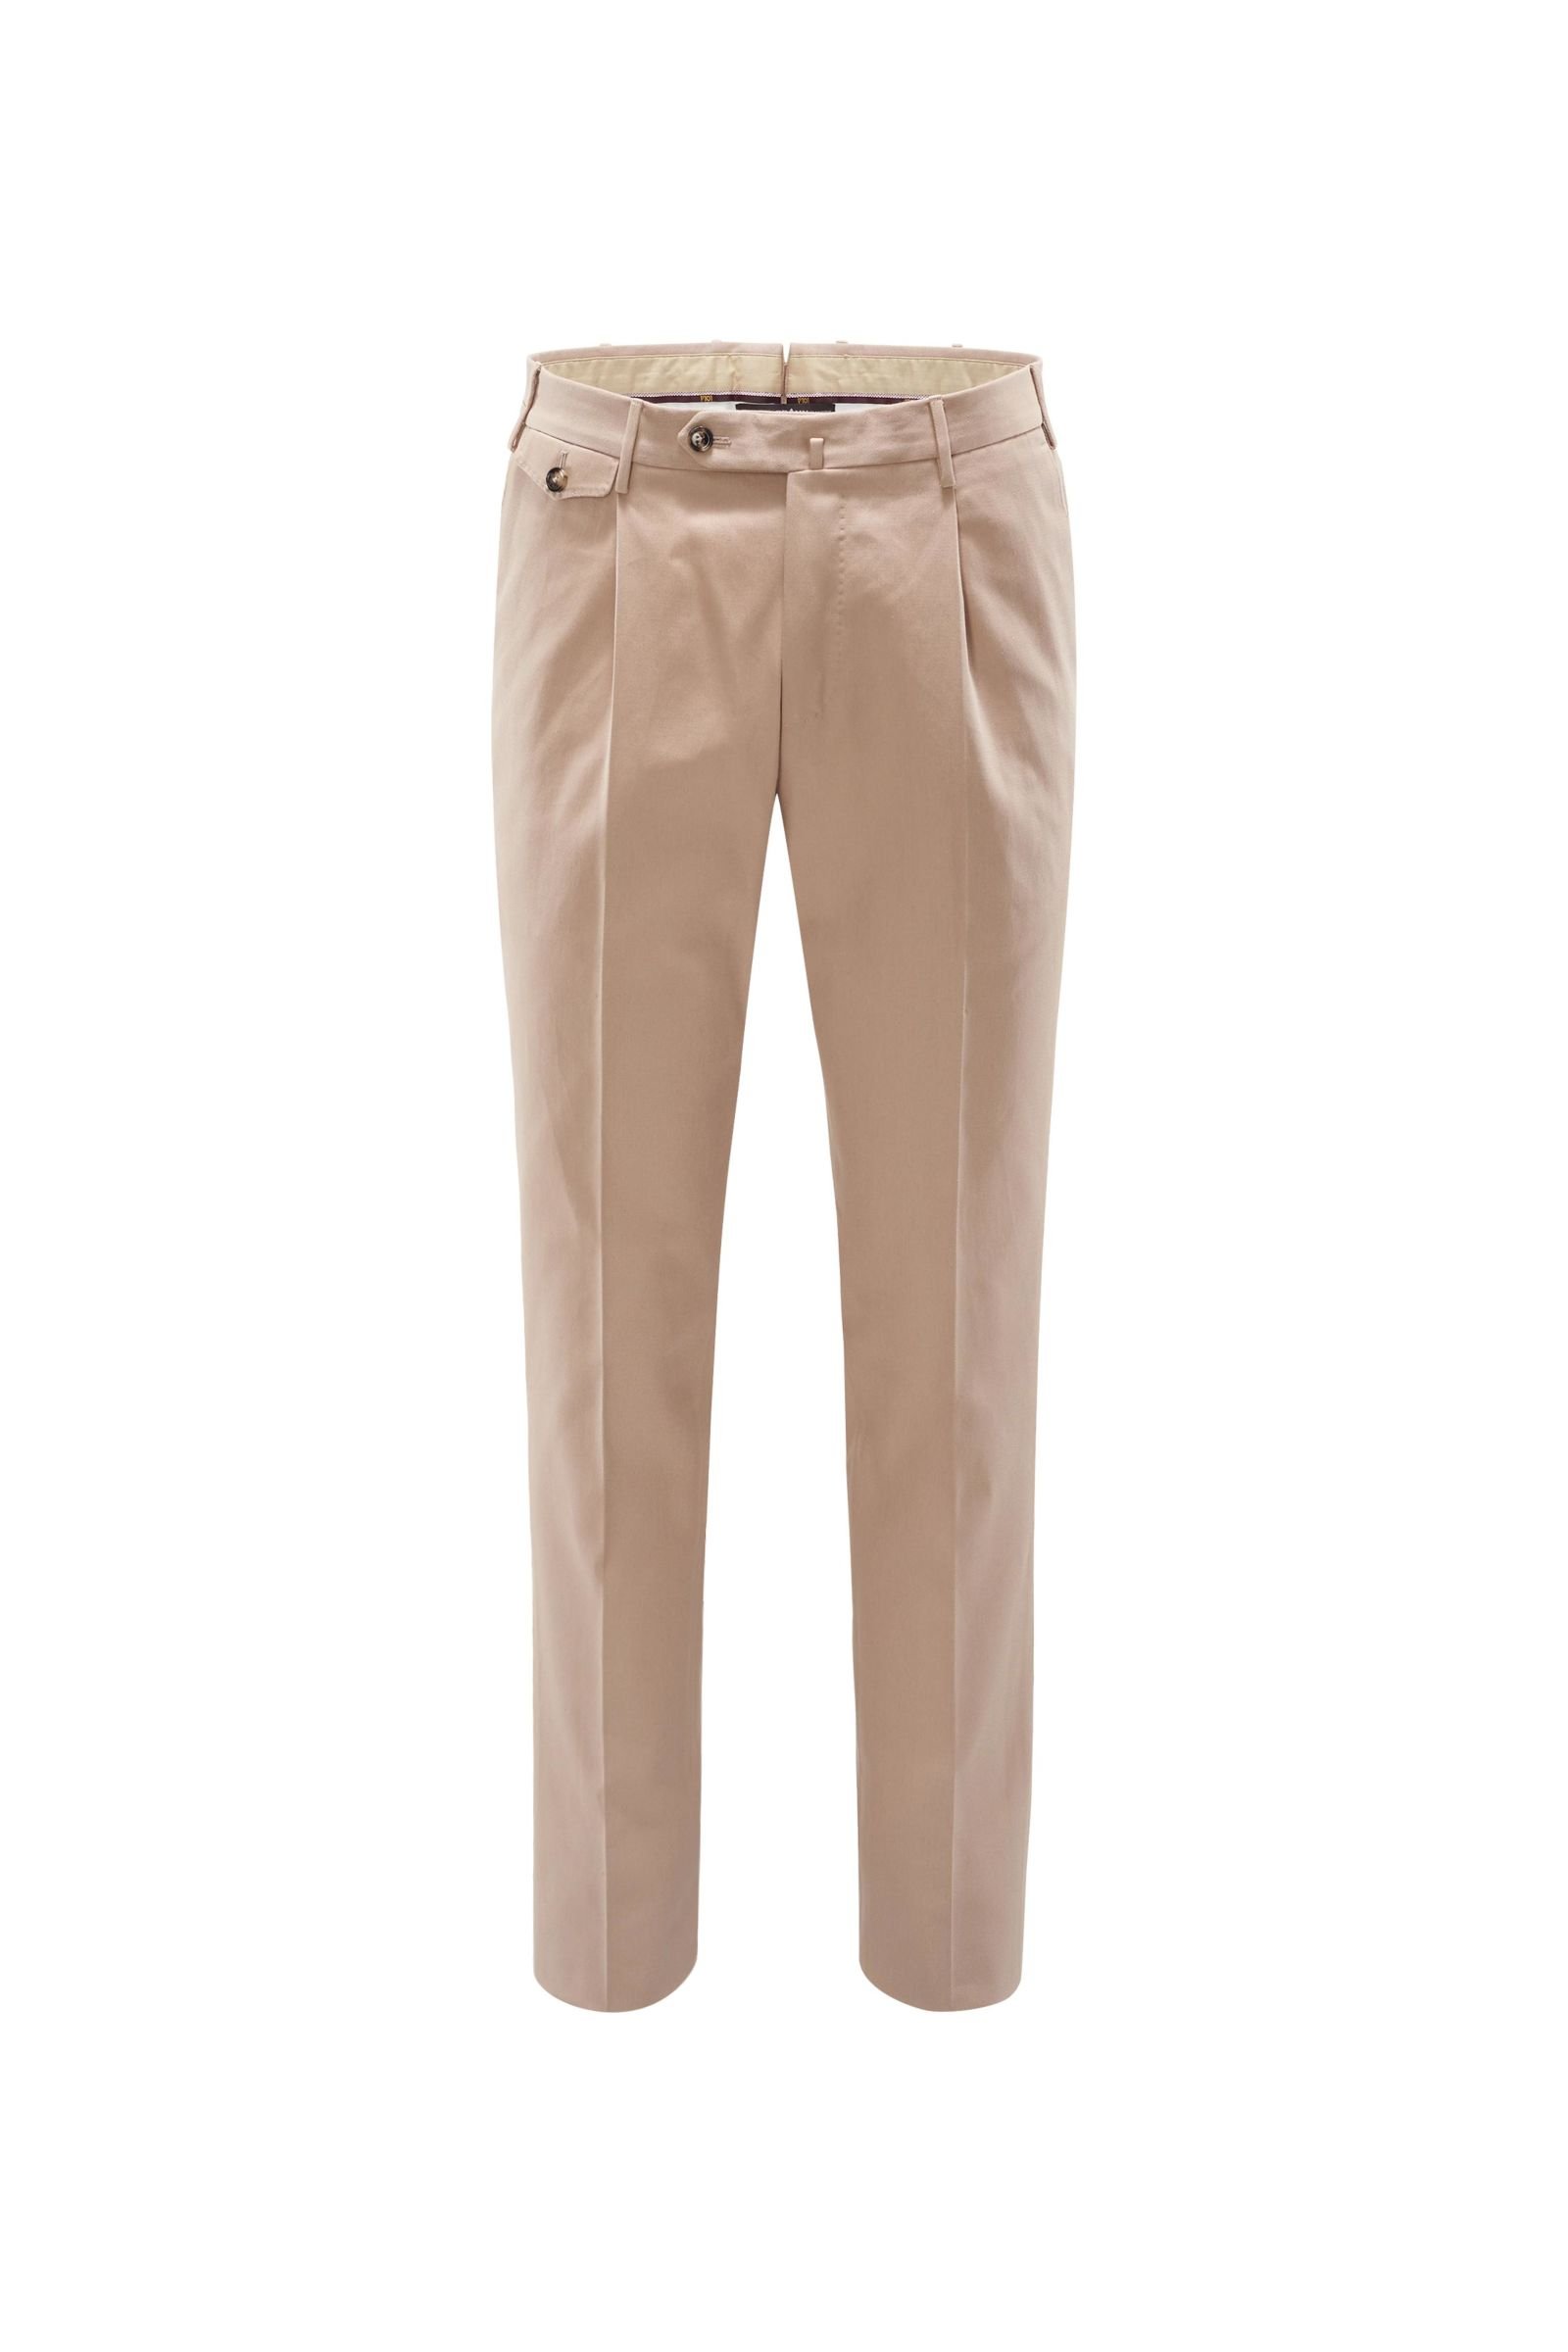 Cotton trousers 'The Draper Gentleman Fit' beige